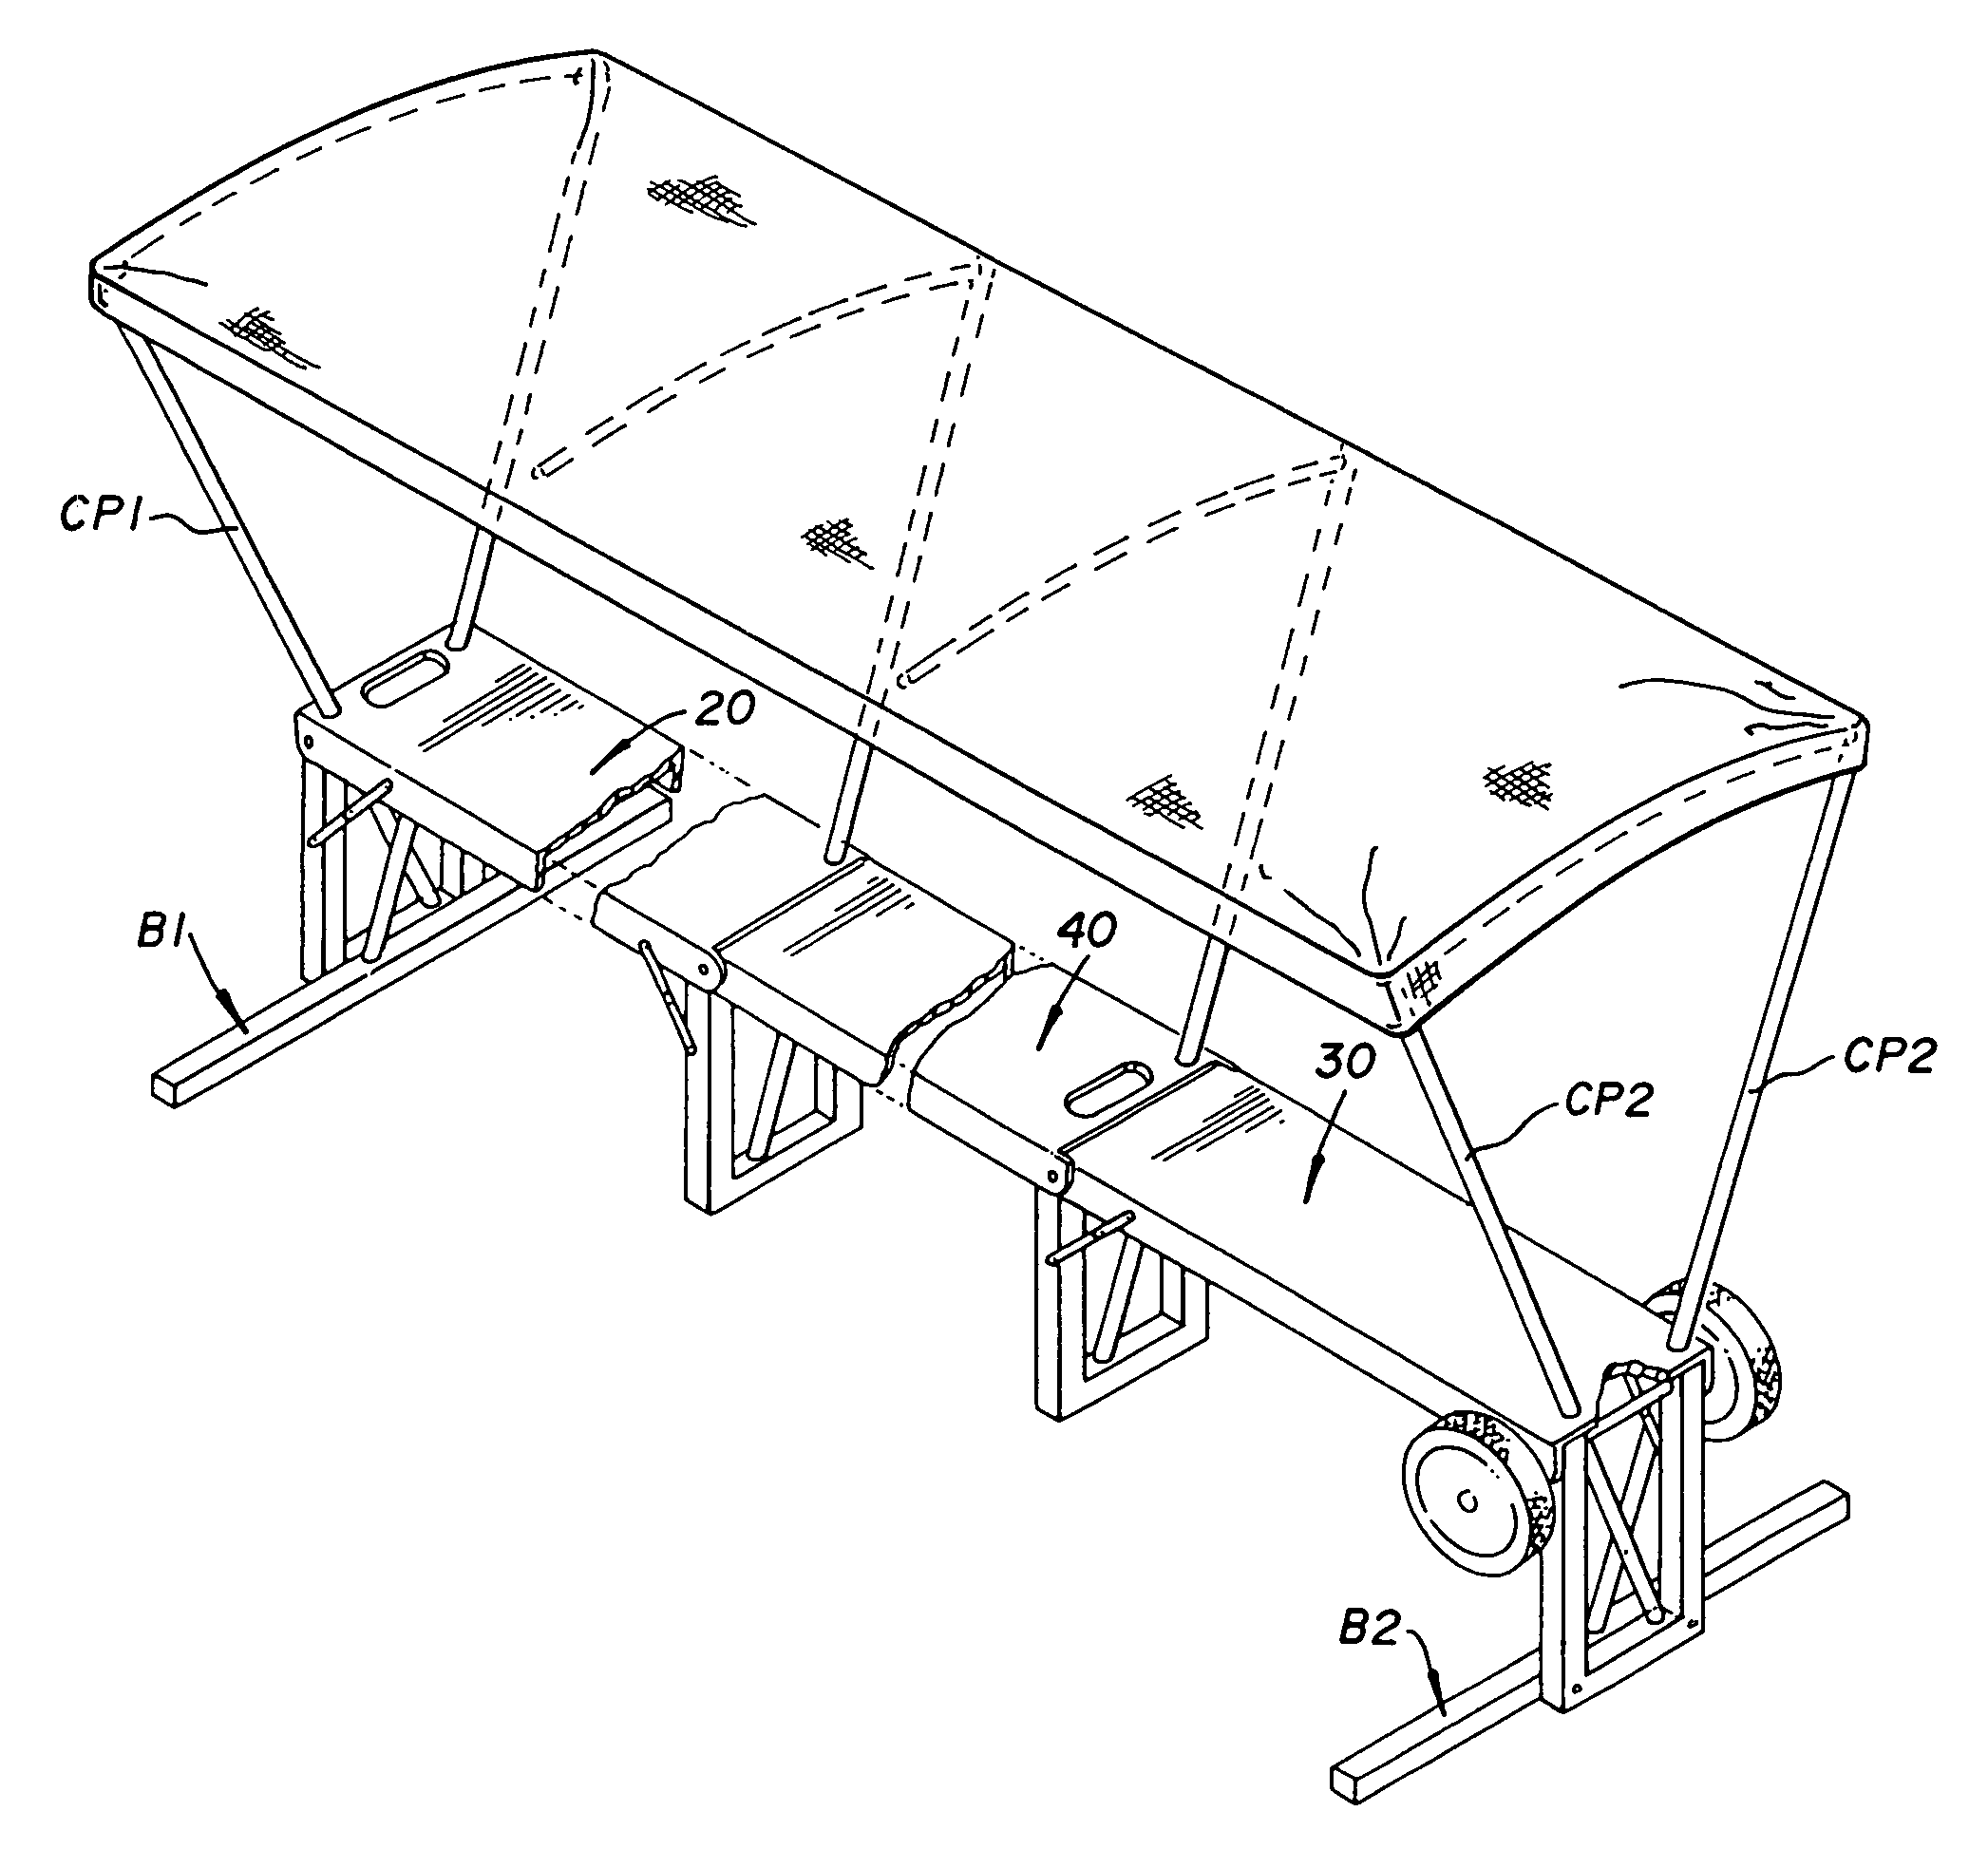 Folding platform structure